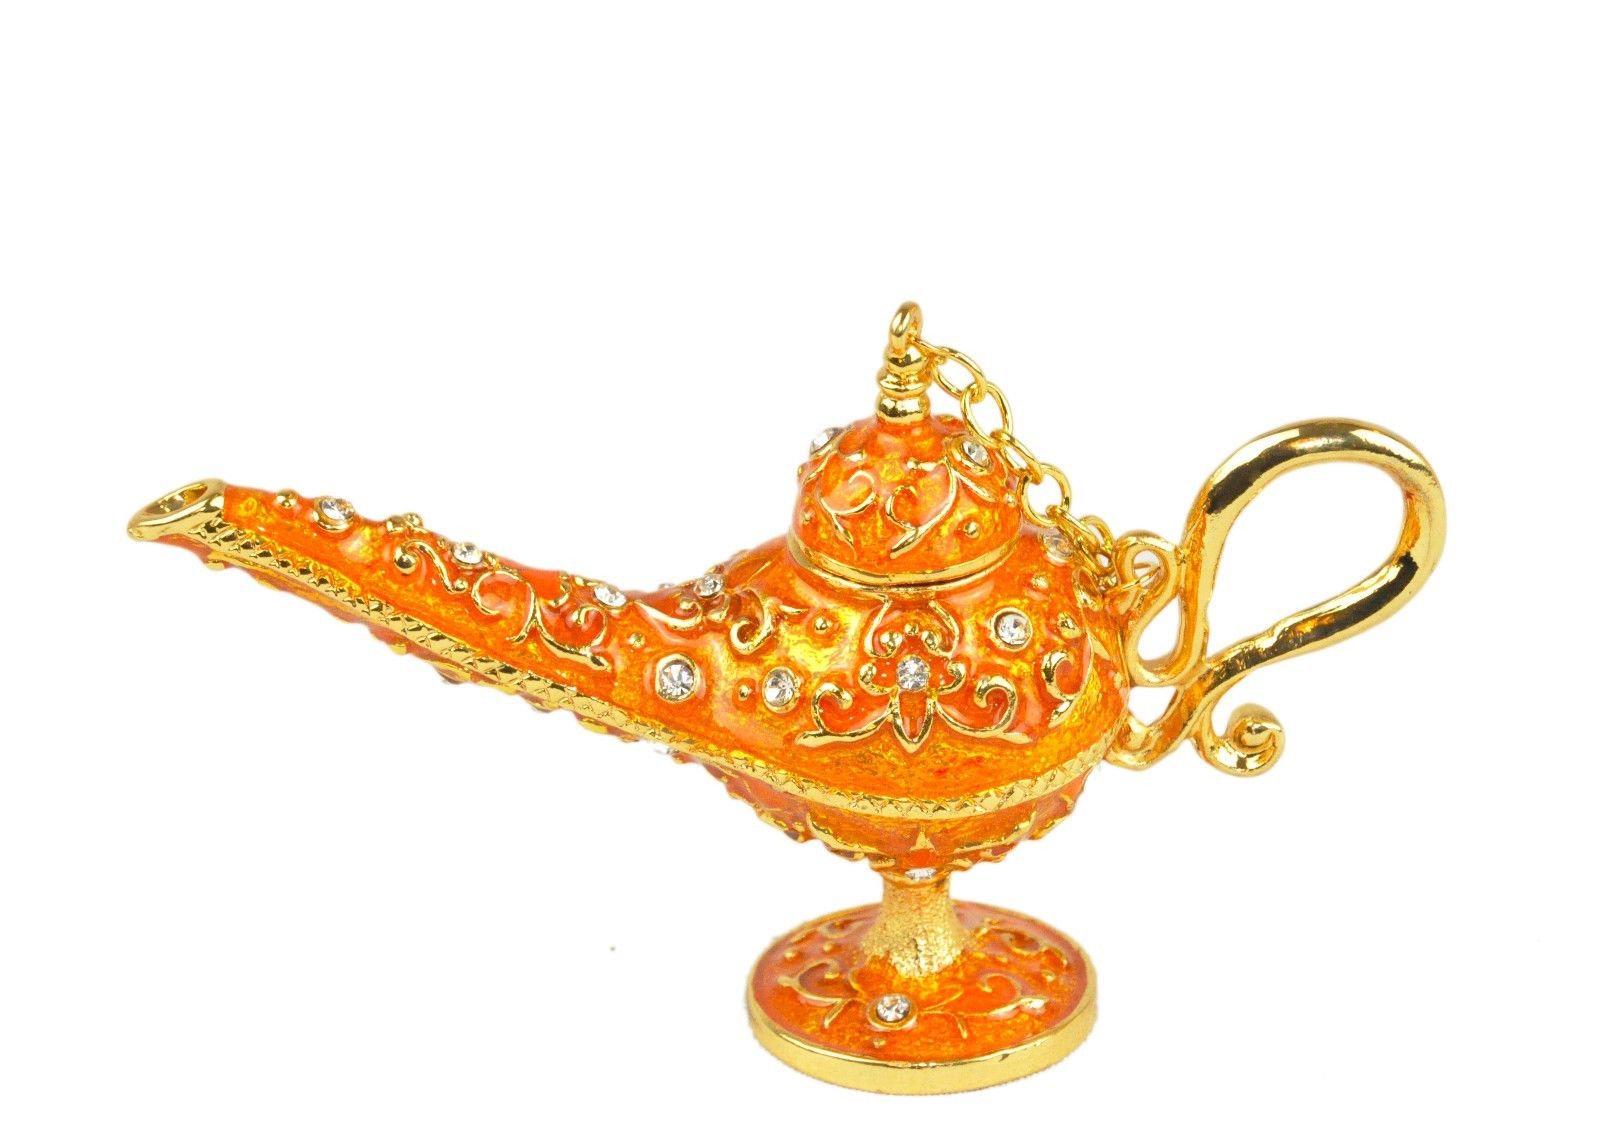 Metal Aladdin Genie Lamps Legend Aladdin Magic Lamp - Gold I Small I Pakistani Artisan Design I Decoration Piece Accent